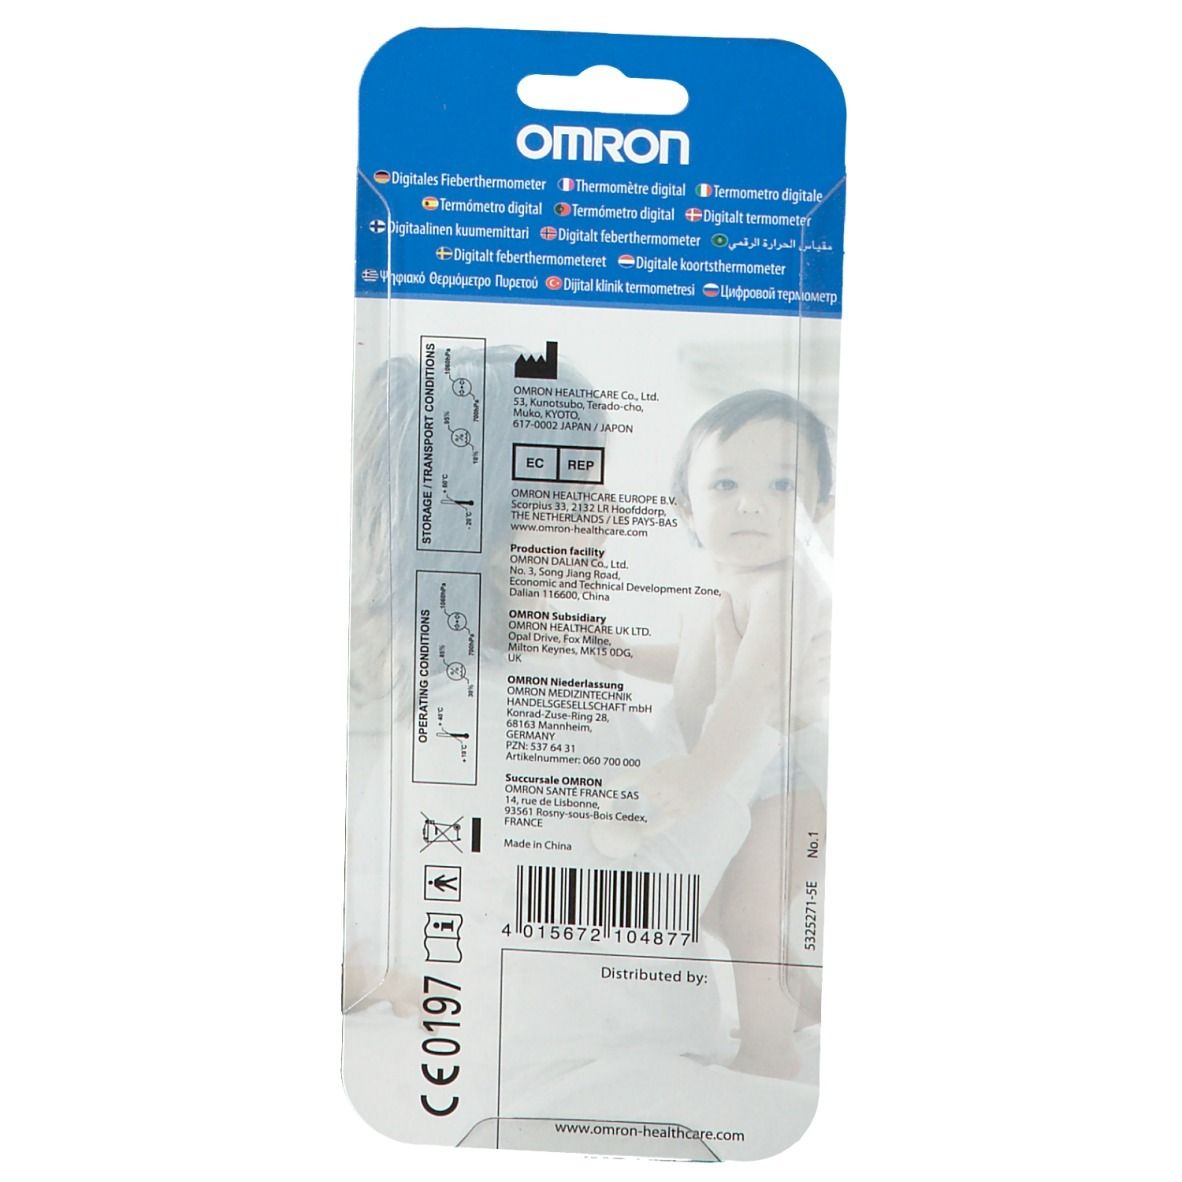 OMRON Eco Temp Basic Digitales Fieberthermometer